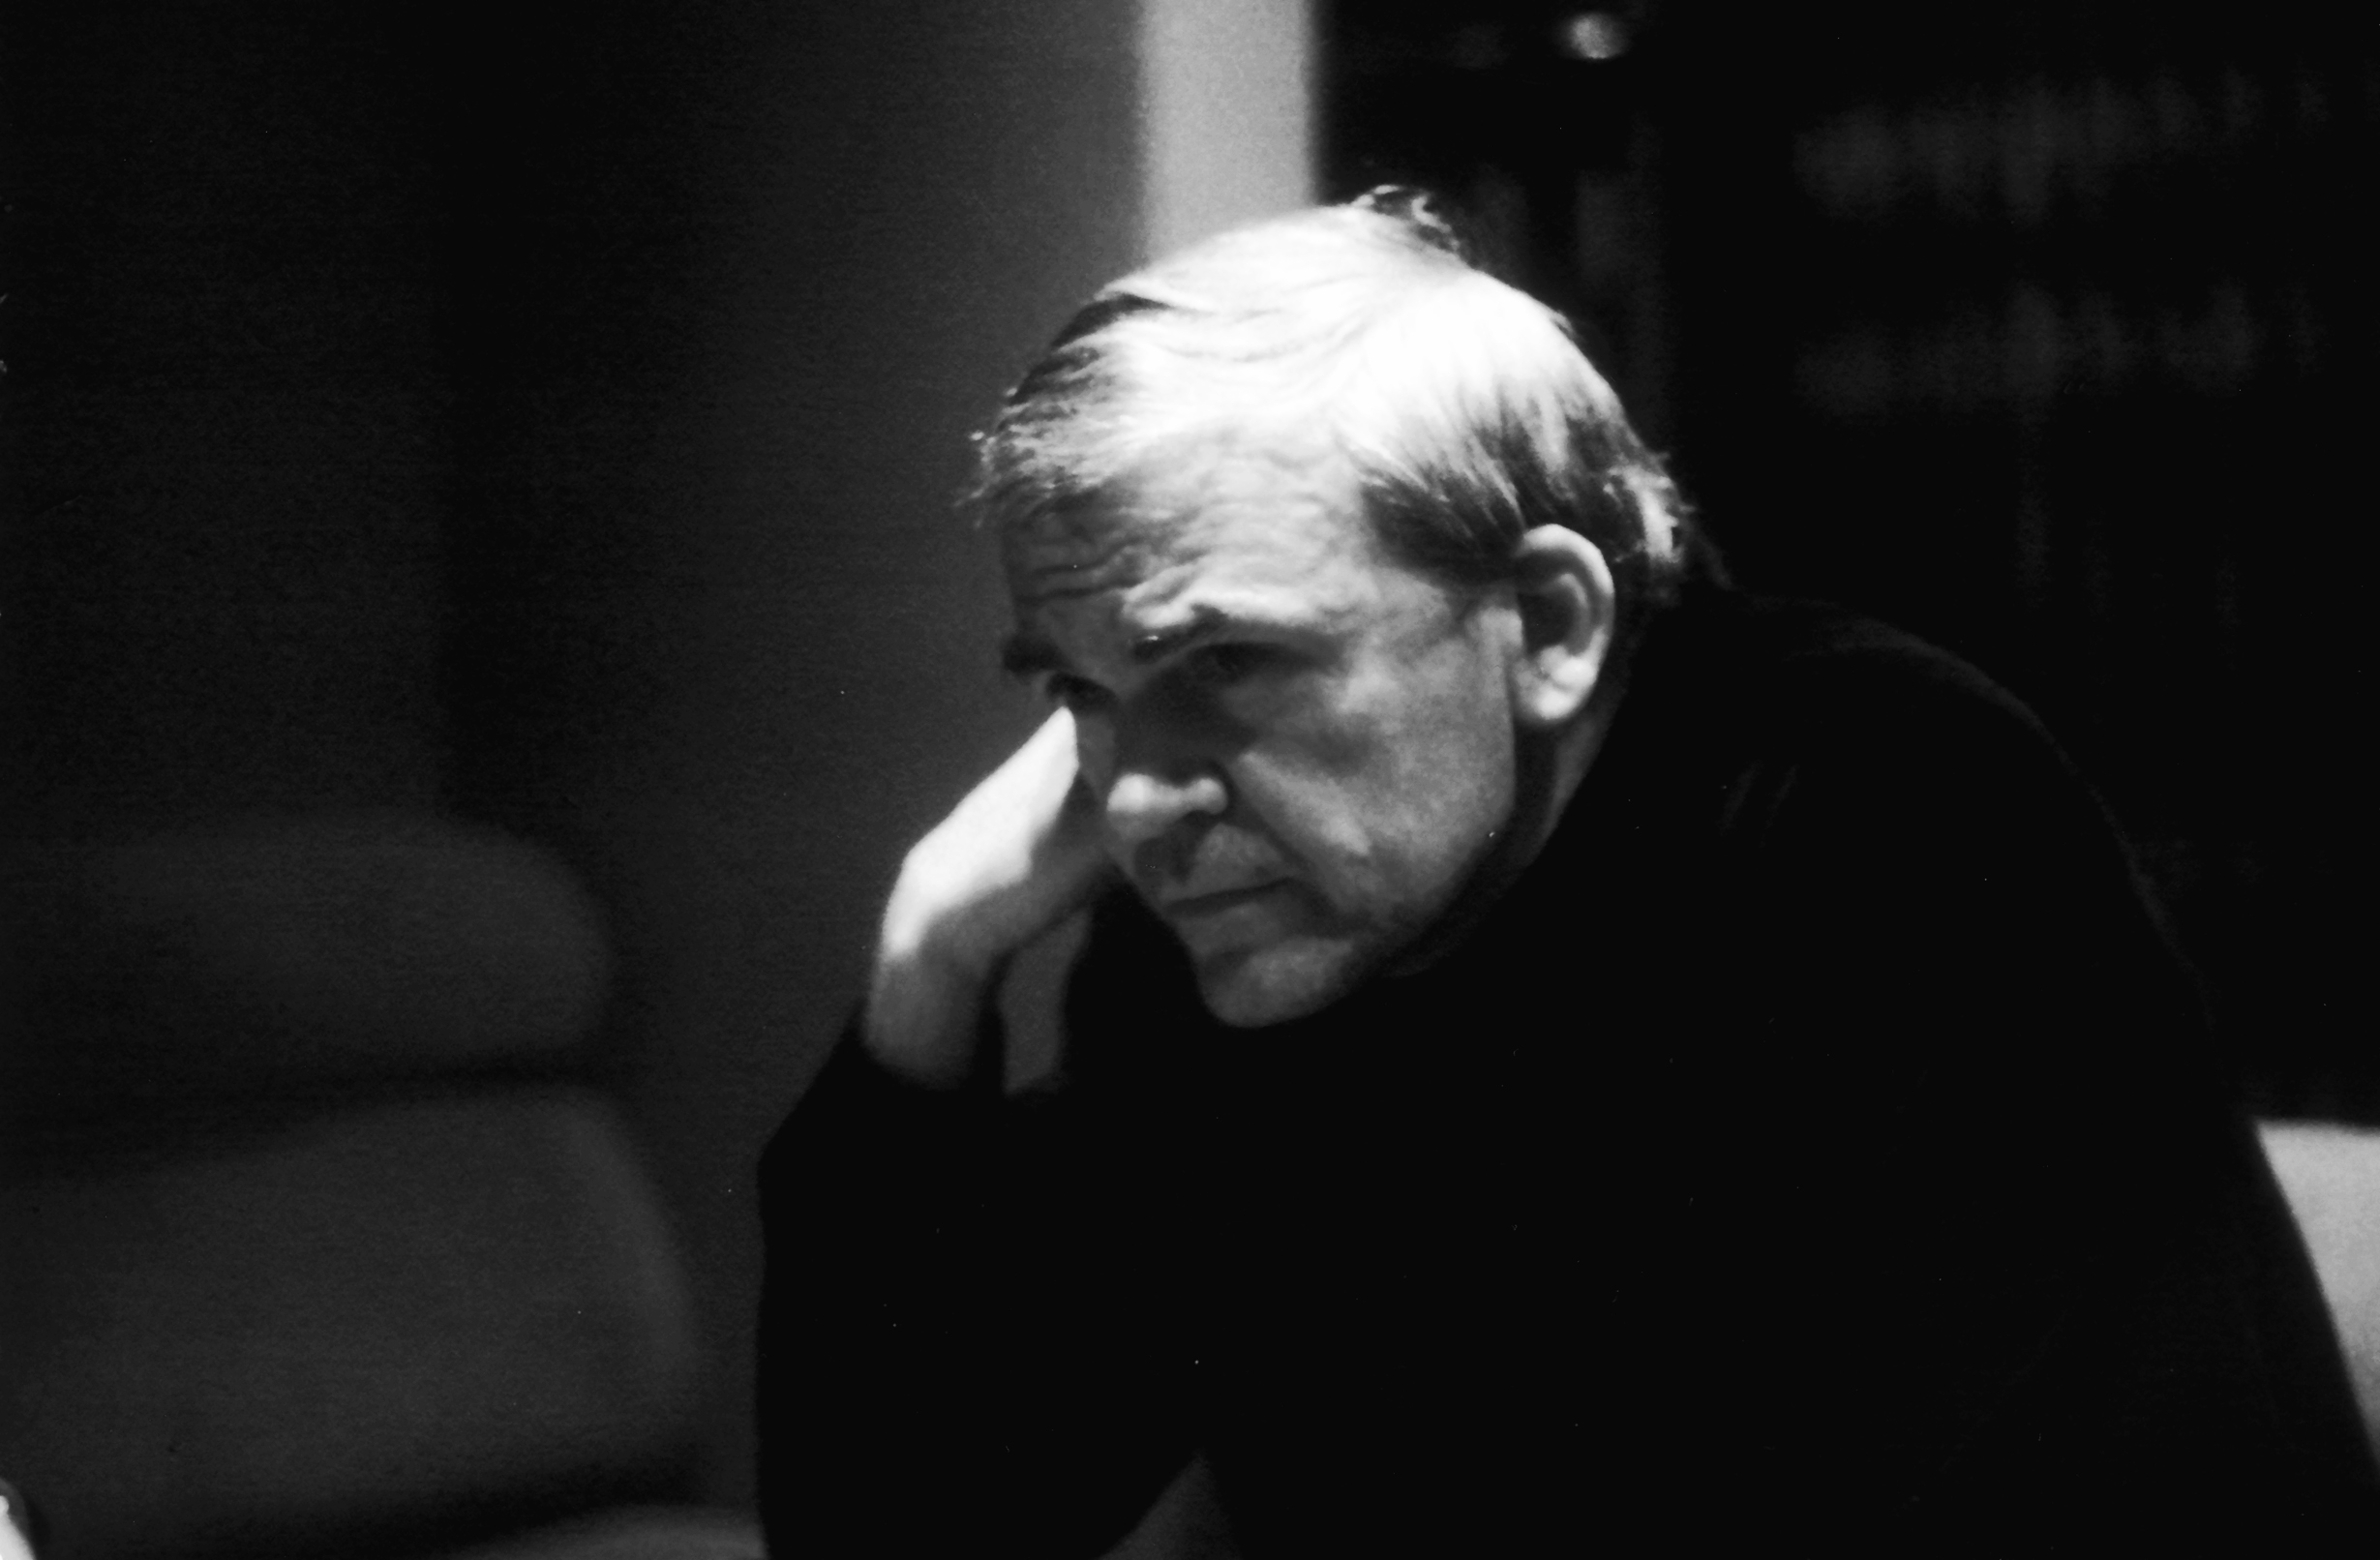 Milan Kundera: The Nobel Prize for Literature Winner We Never Had